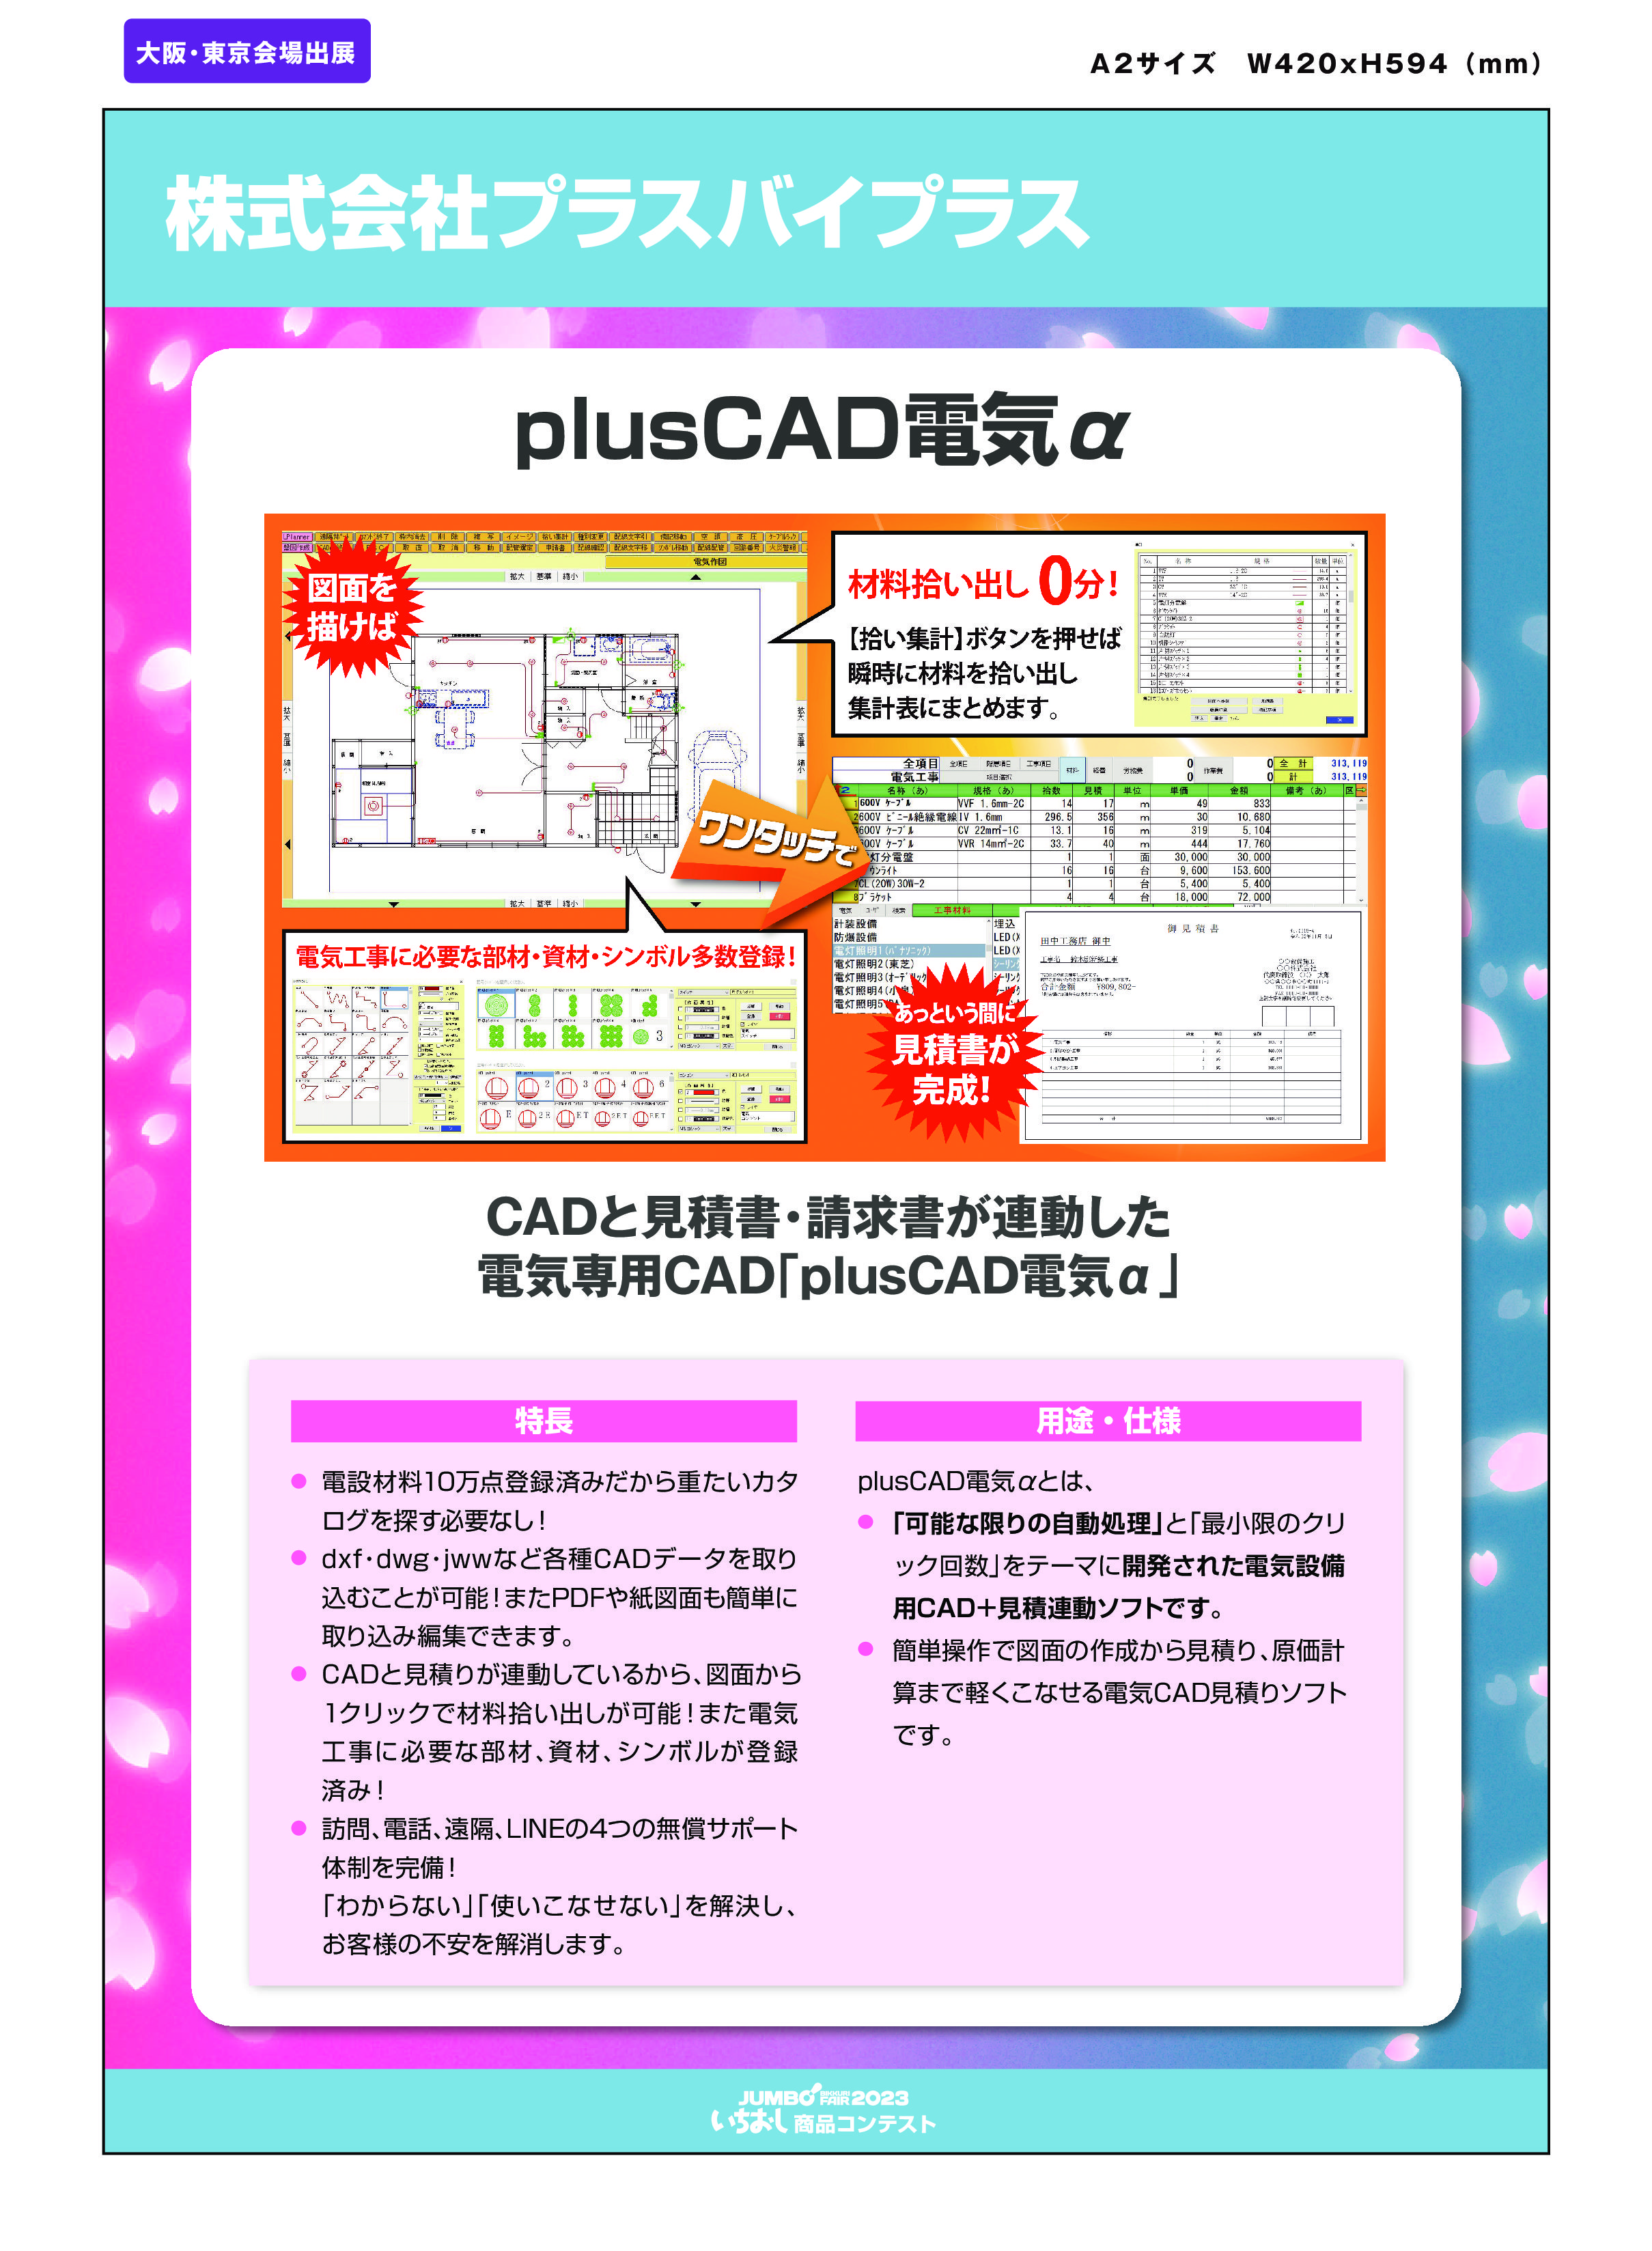 「plusCAD電気a」株式会社プラスバイプラスの画像